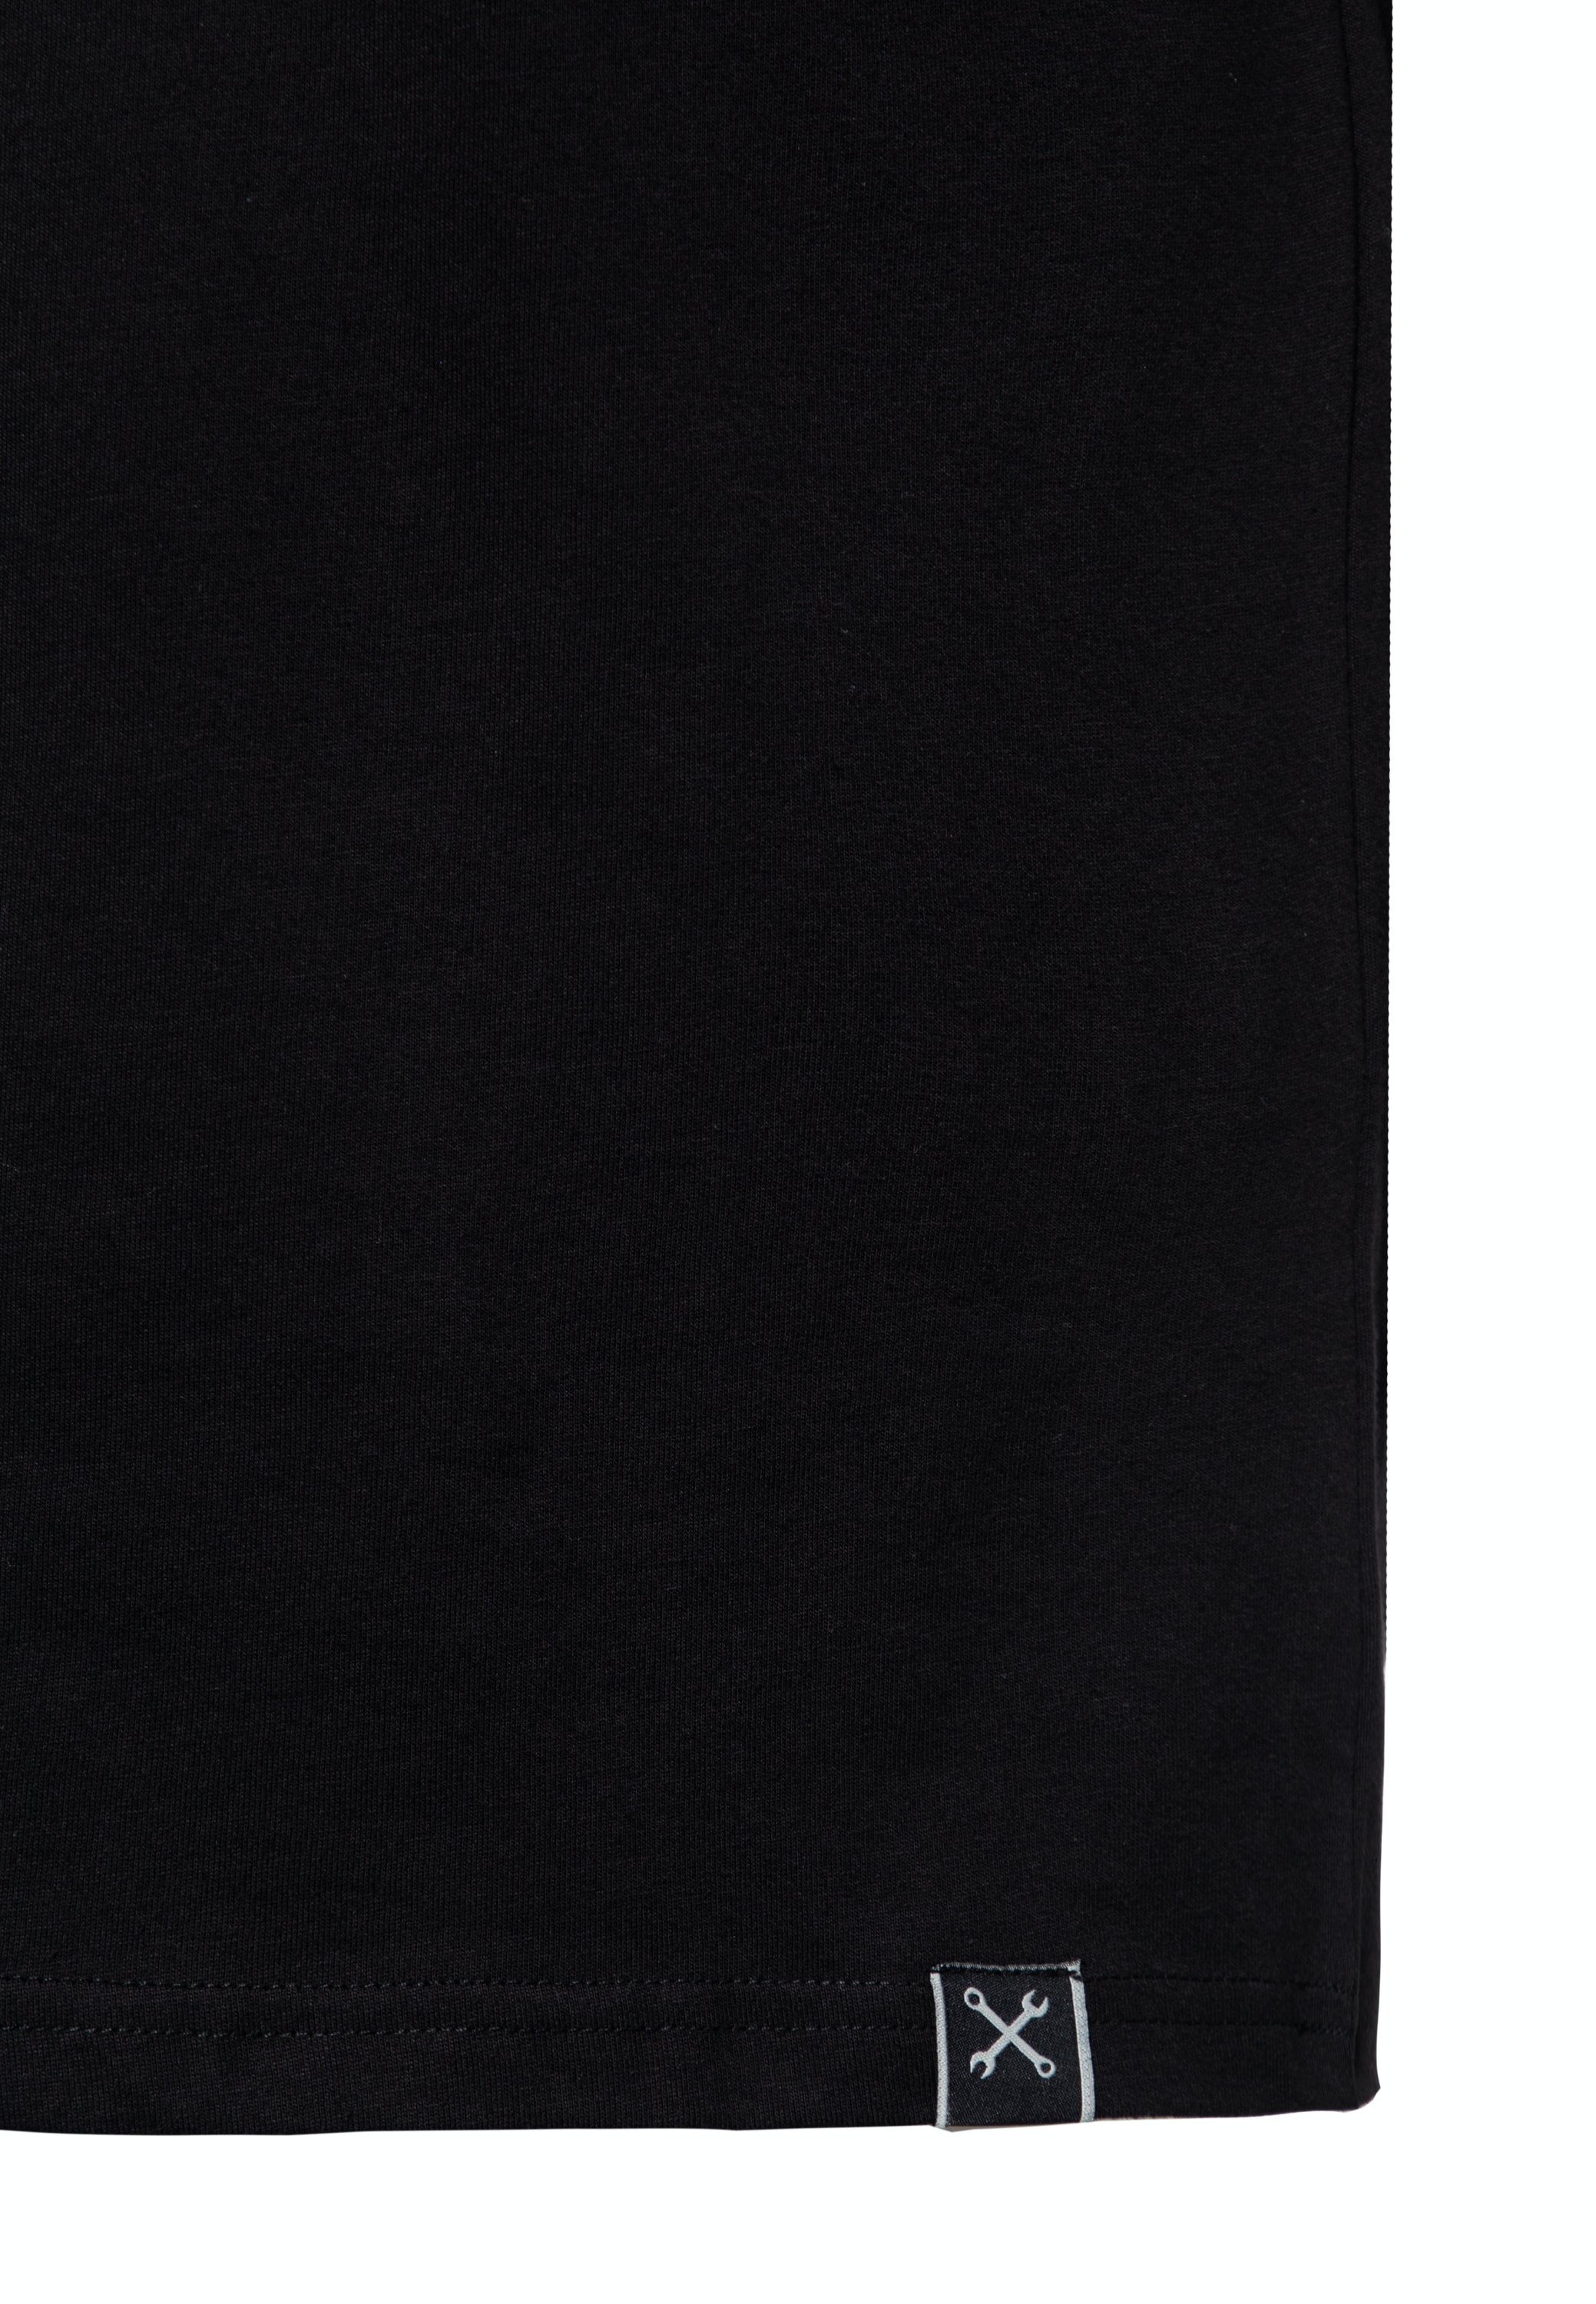 Retro mit Print schwarz (1-tlg) Print-Shirt KingKerosin Rebel Rockabilly Street Design im Front